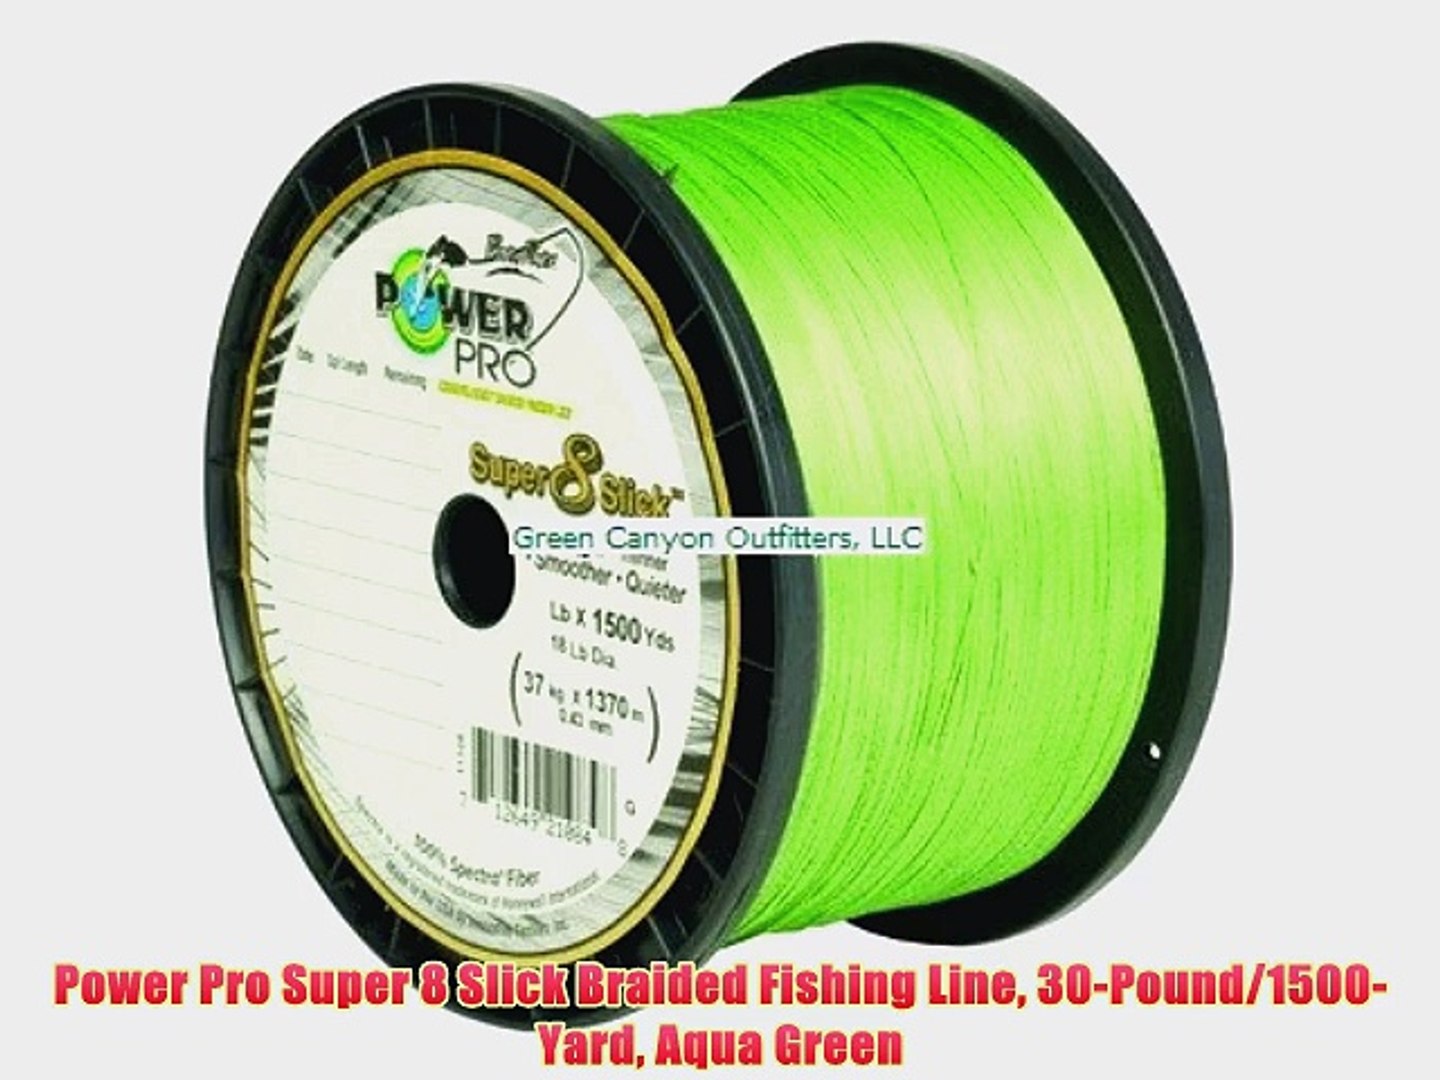 Power Pro Super 8 Slick Braided Fishing Line 30-Pound/1500-Yard Aqua Green  - video Dailymotion